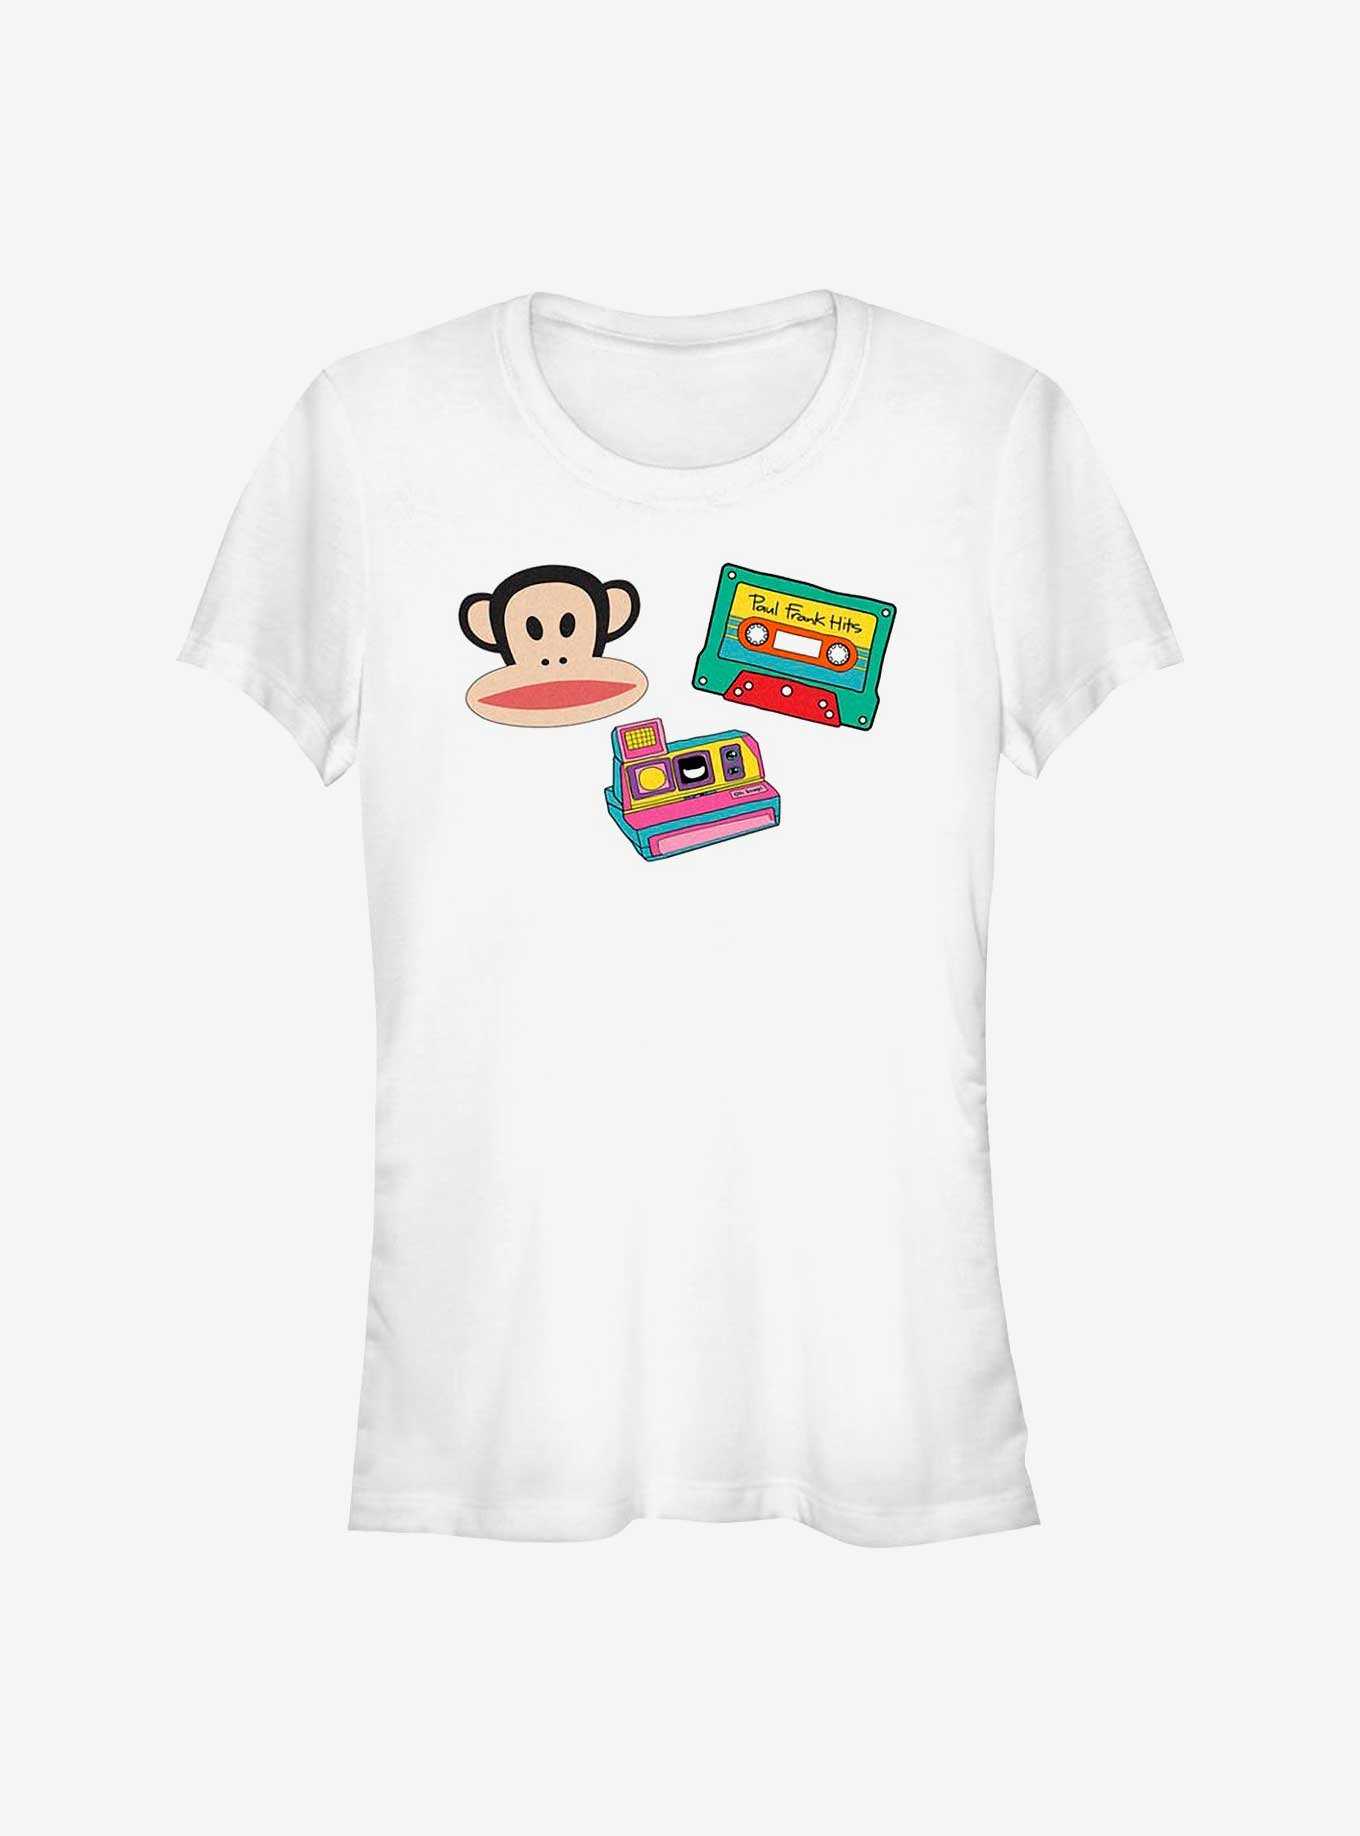 Paul Frank Staff Pick Slides Girls T-Shirt, , hi-res